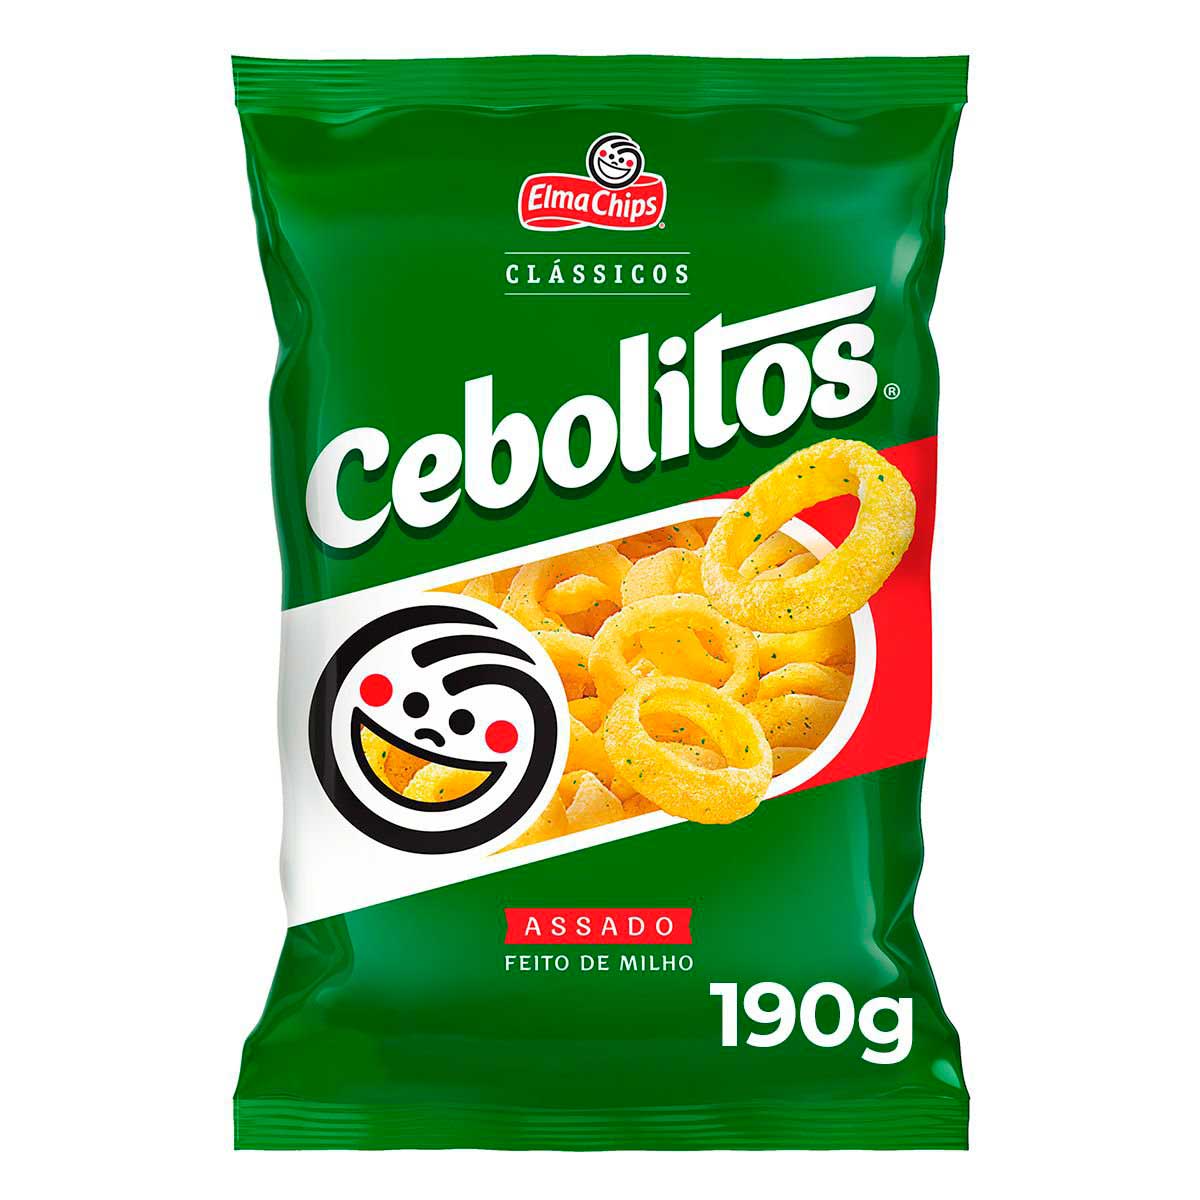 salgadinho-cebola-elma-chips-cebolitos-190g-1.jpg